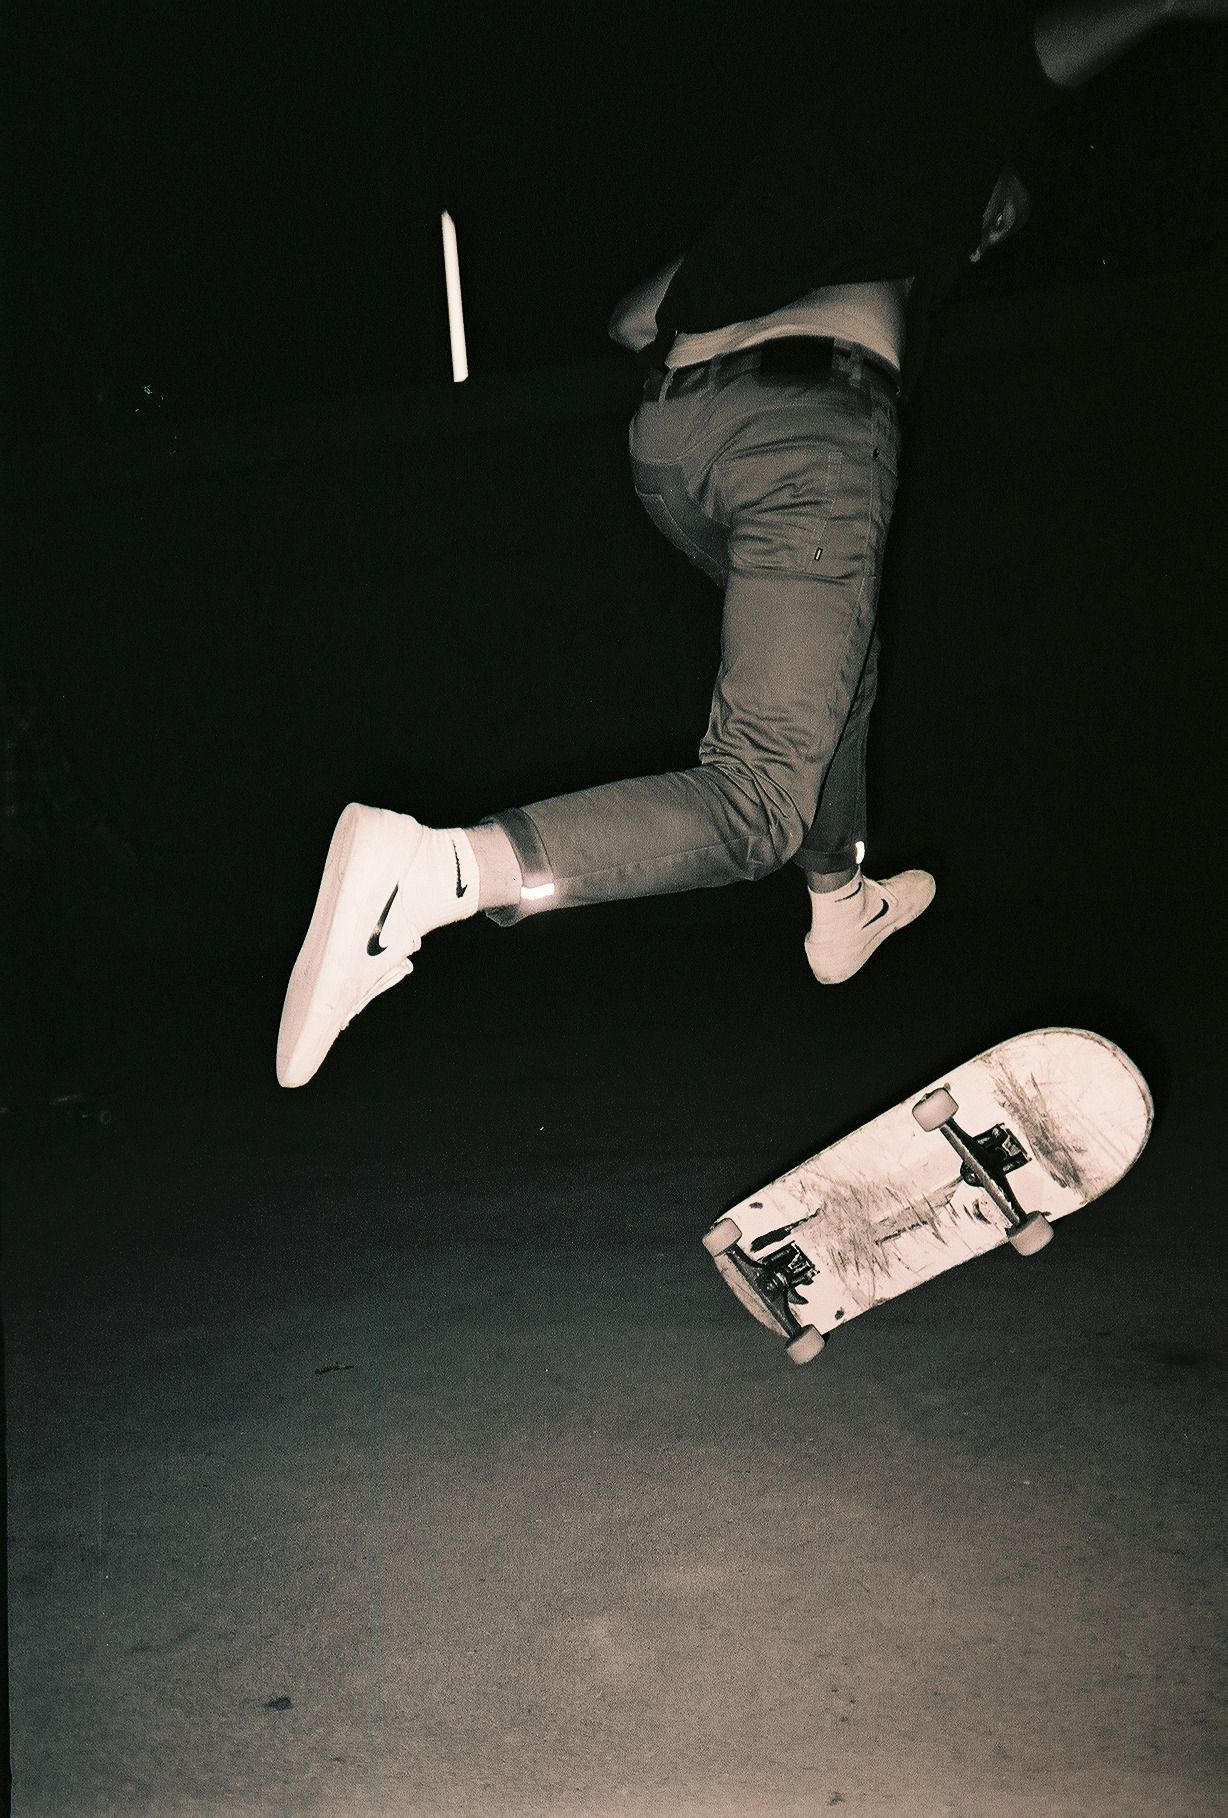 Vintage Skateboard Aesthetic Wallpapers